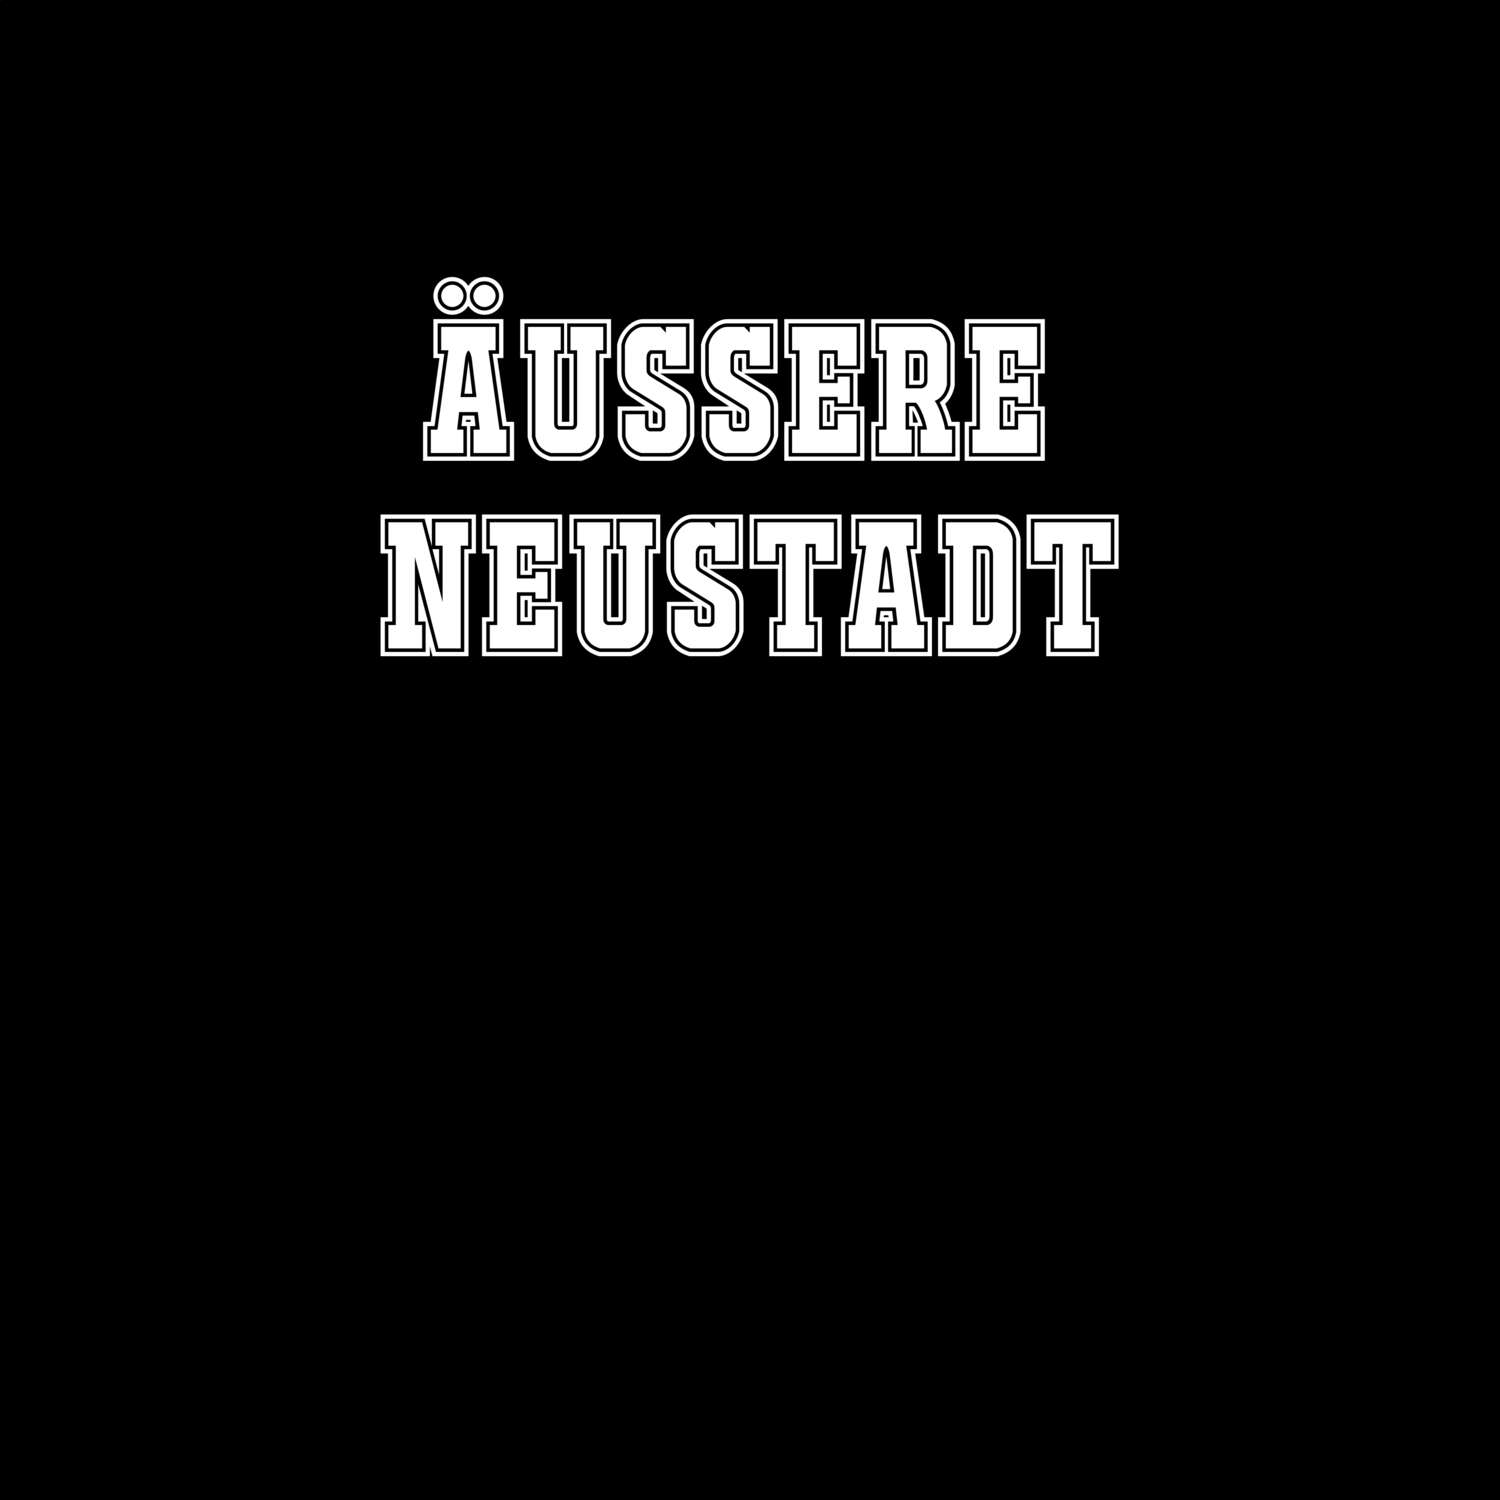 Äußere Neustadt T-Shirt »Classic«